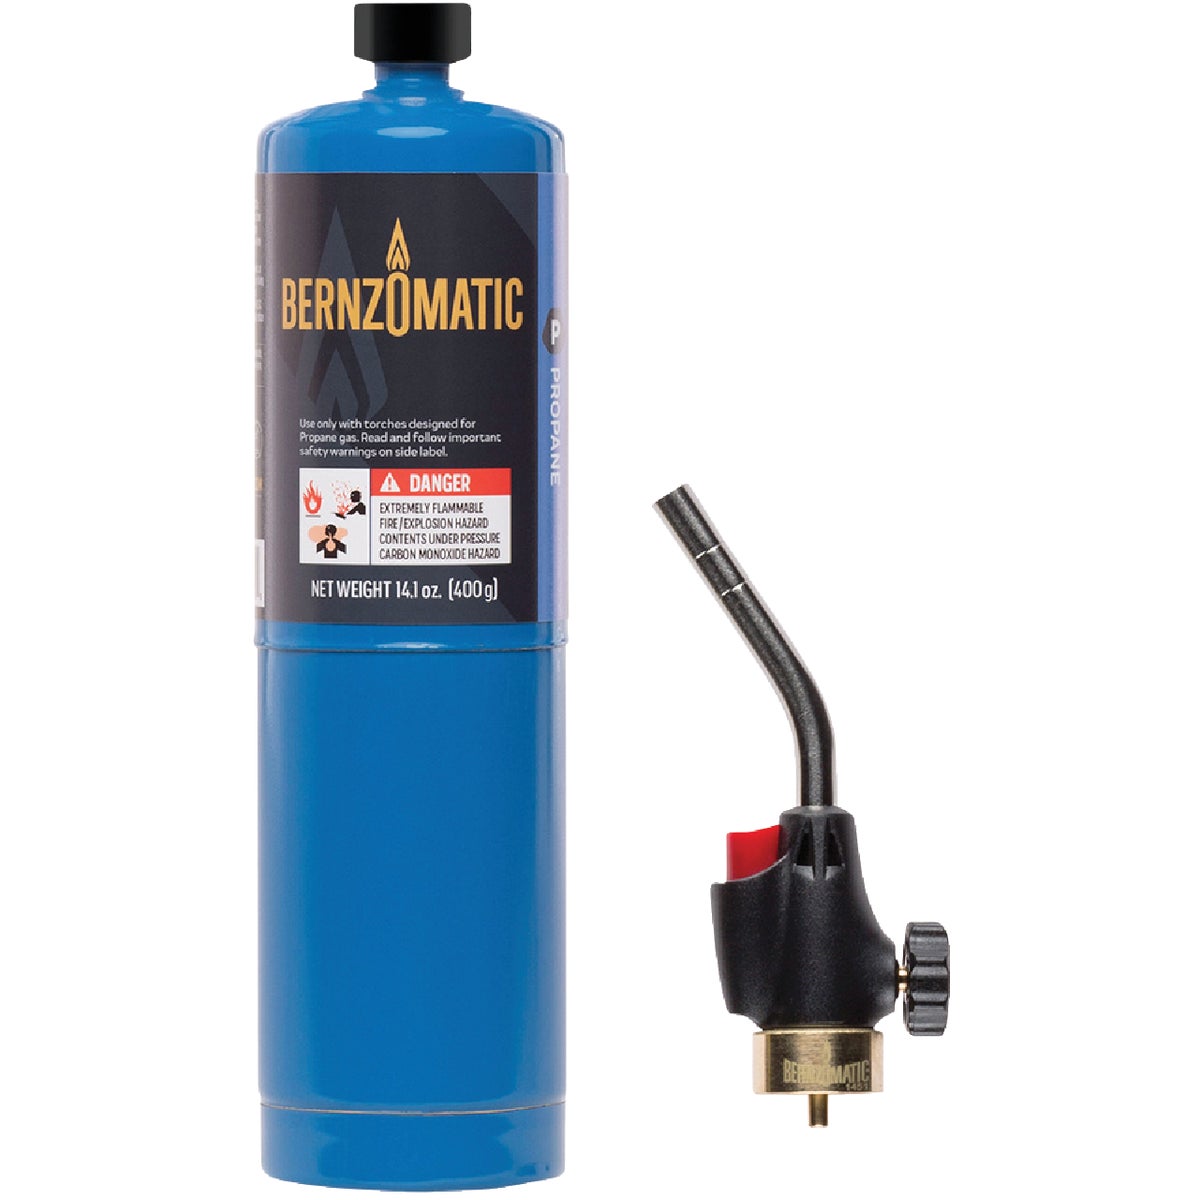 Bernzomatic Basic Plumbing Torch Kit